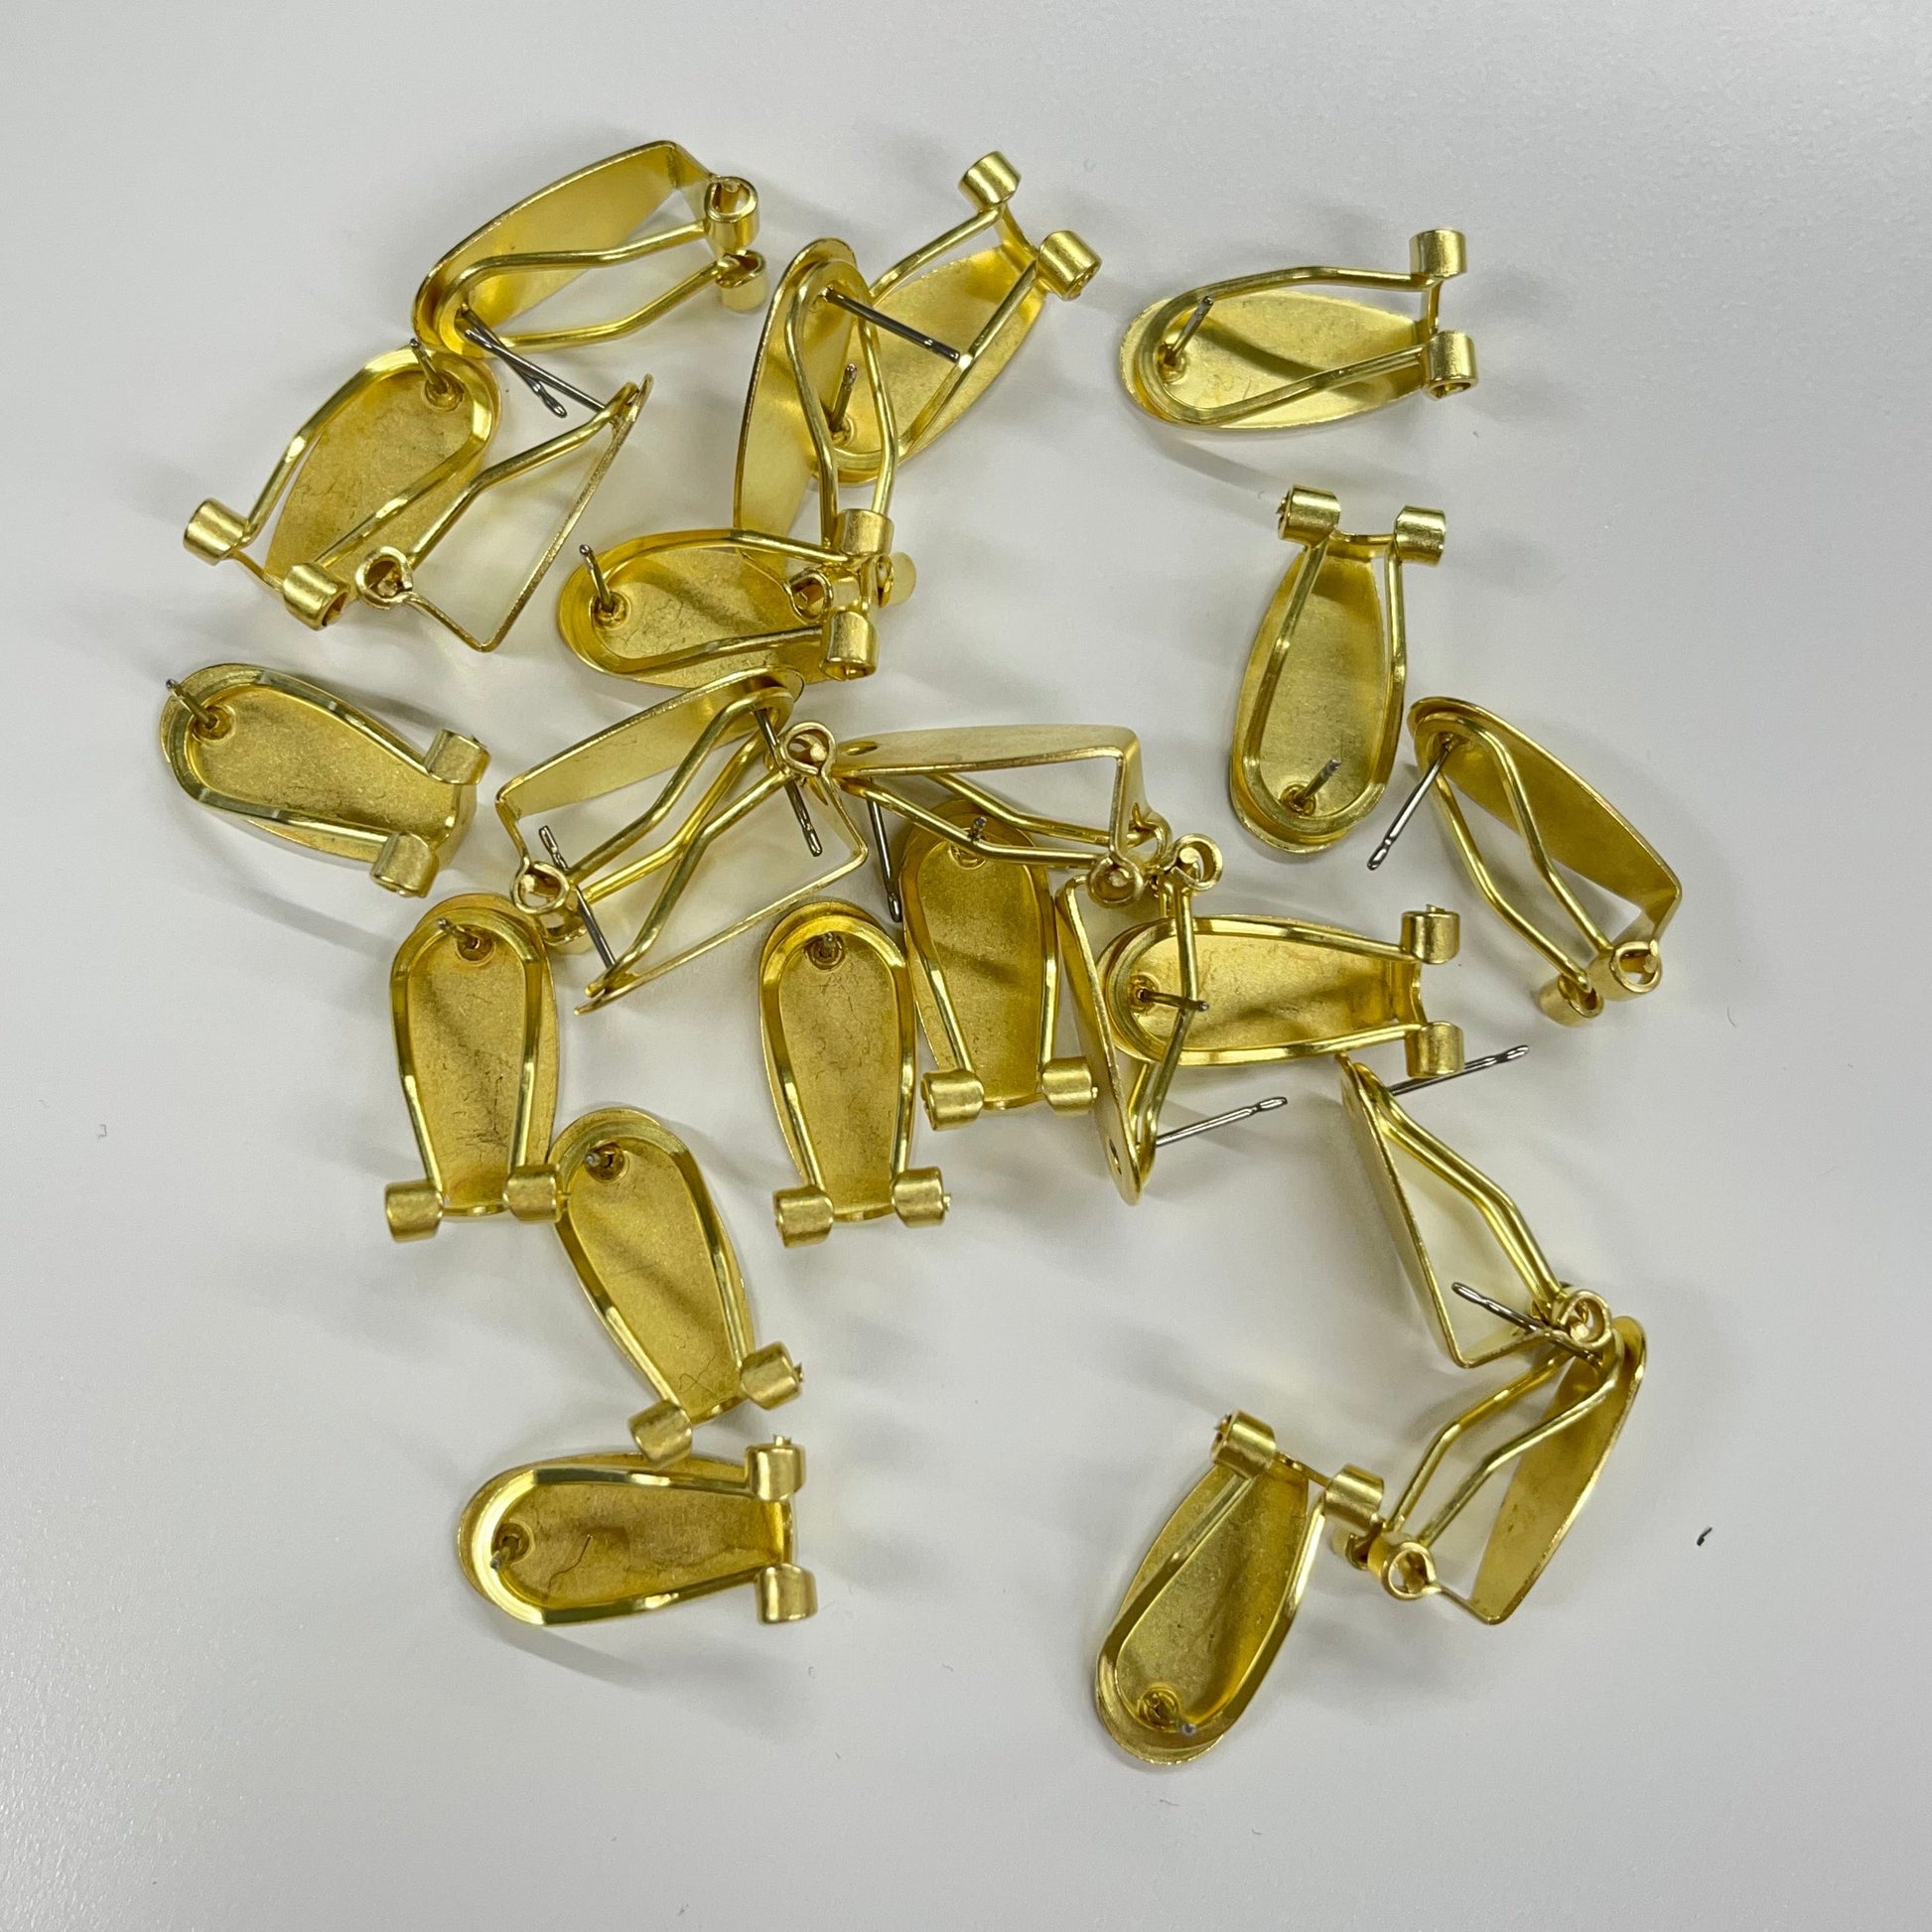 Light Gold (Pair) Silver/Gold/Rose Gold Color Fingernail Lever back Earring Posts, Findings Studs Basics